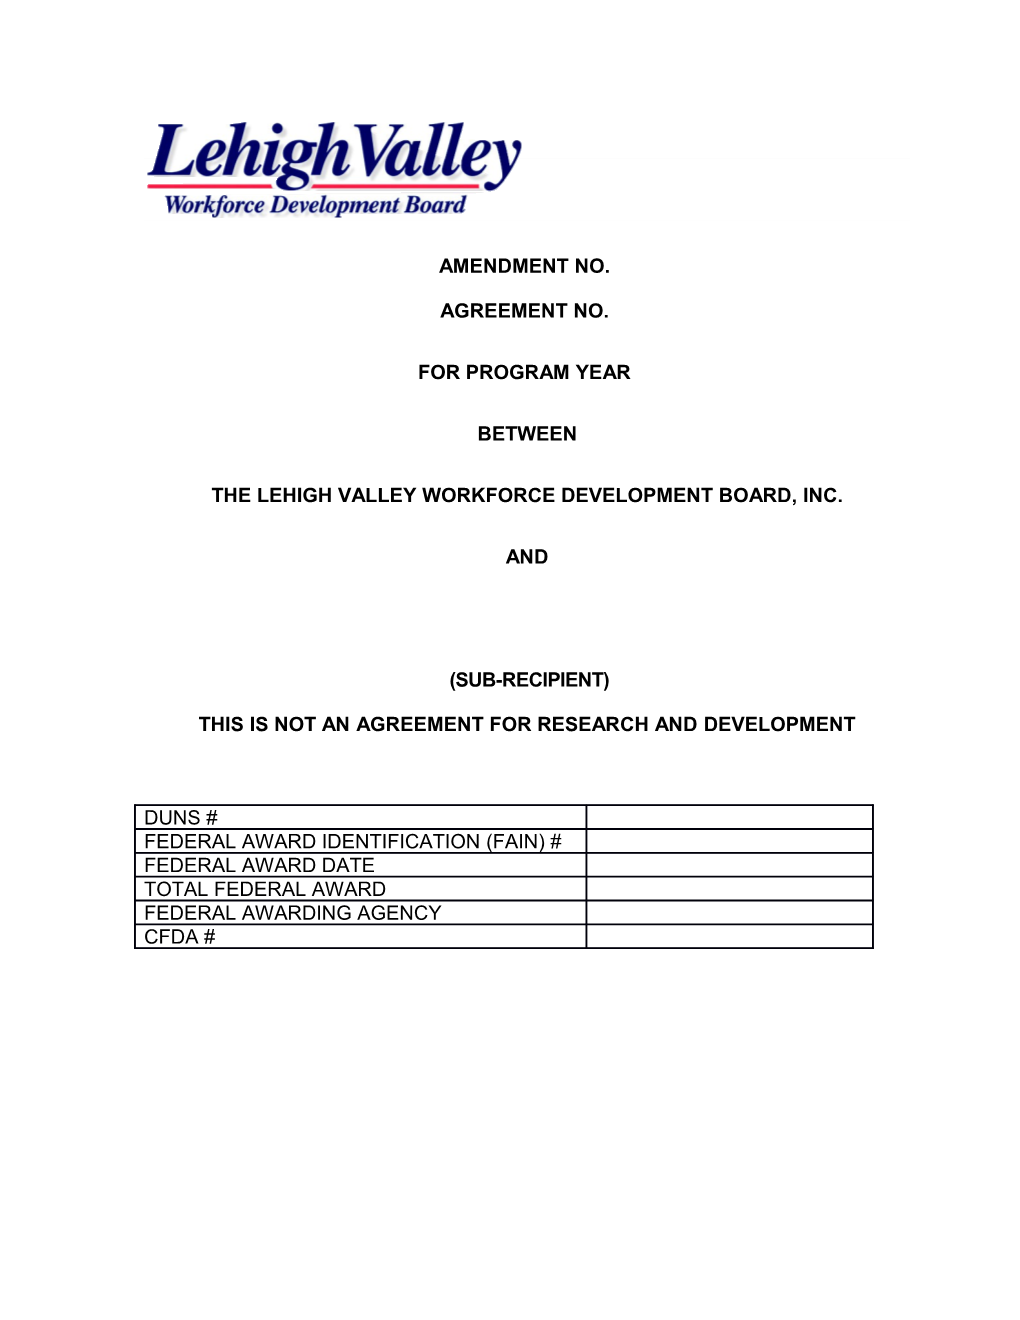 The Lehigh Valley Workforce Development Board, Inc